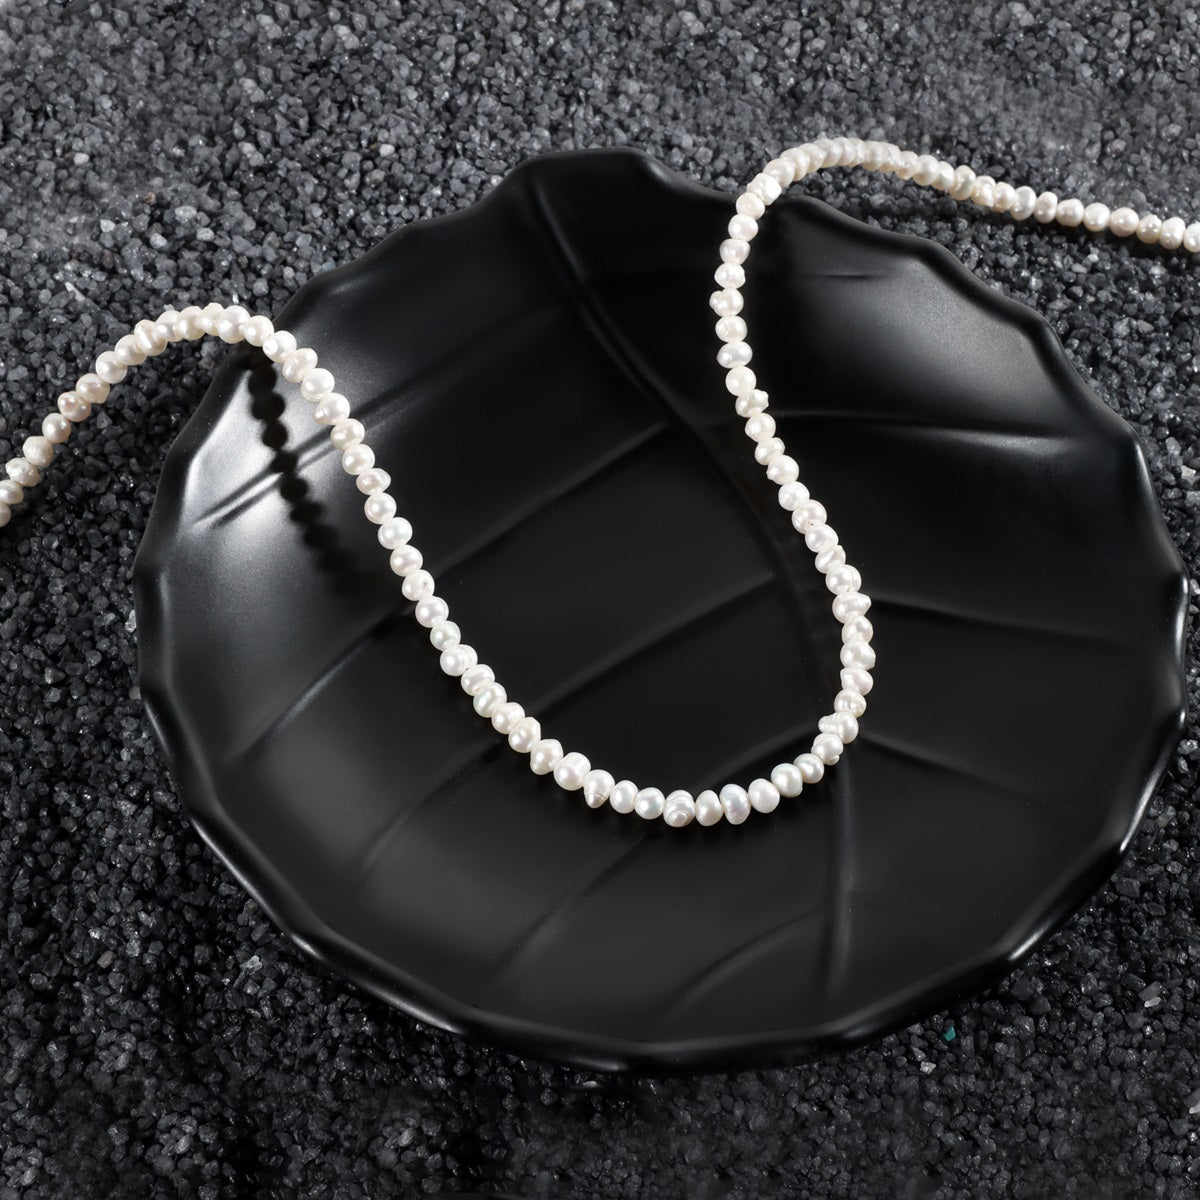 Men's Pearl Gemstone Silver Necklace: Understated luxury